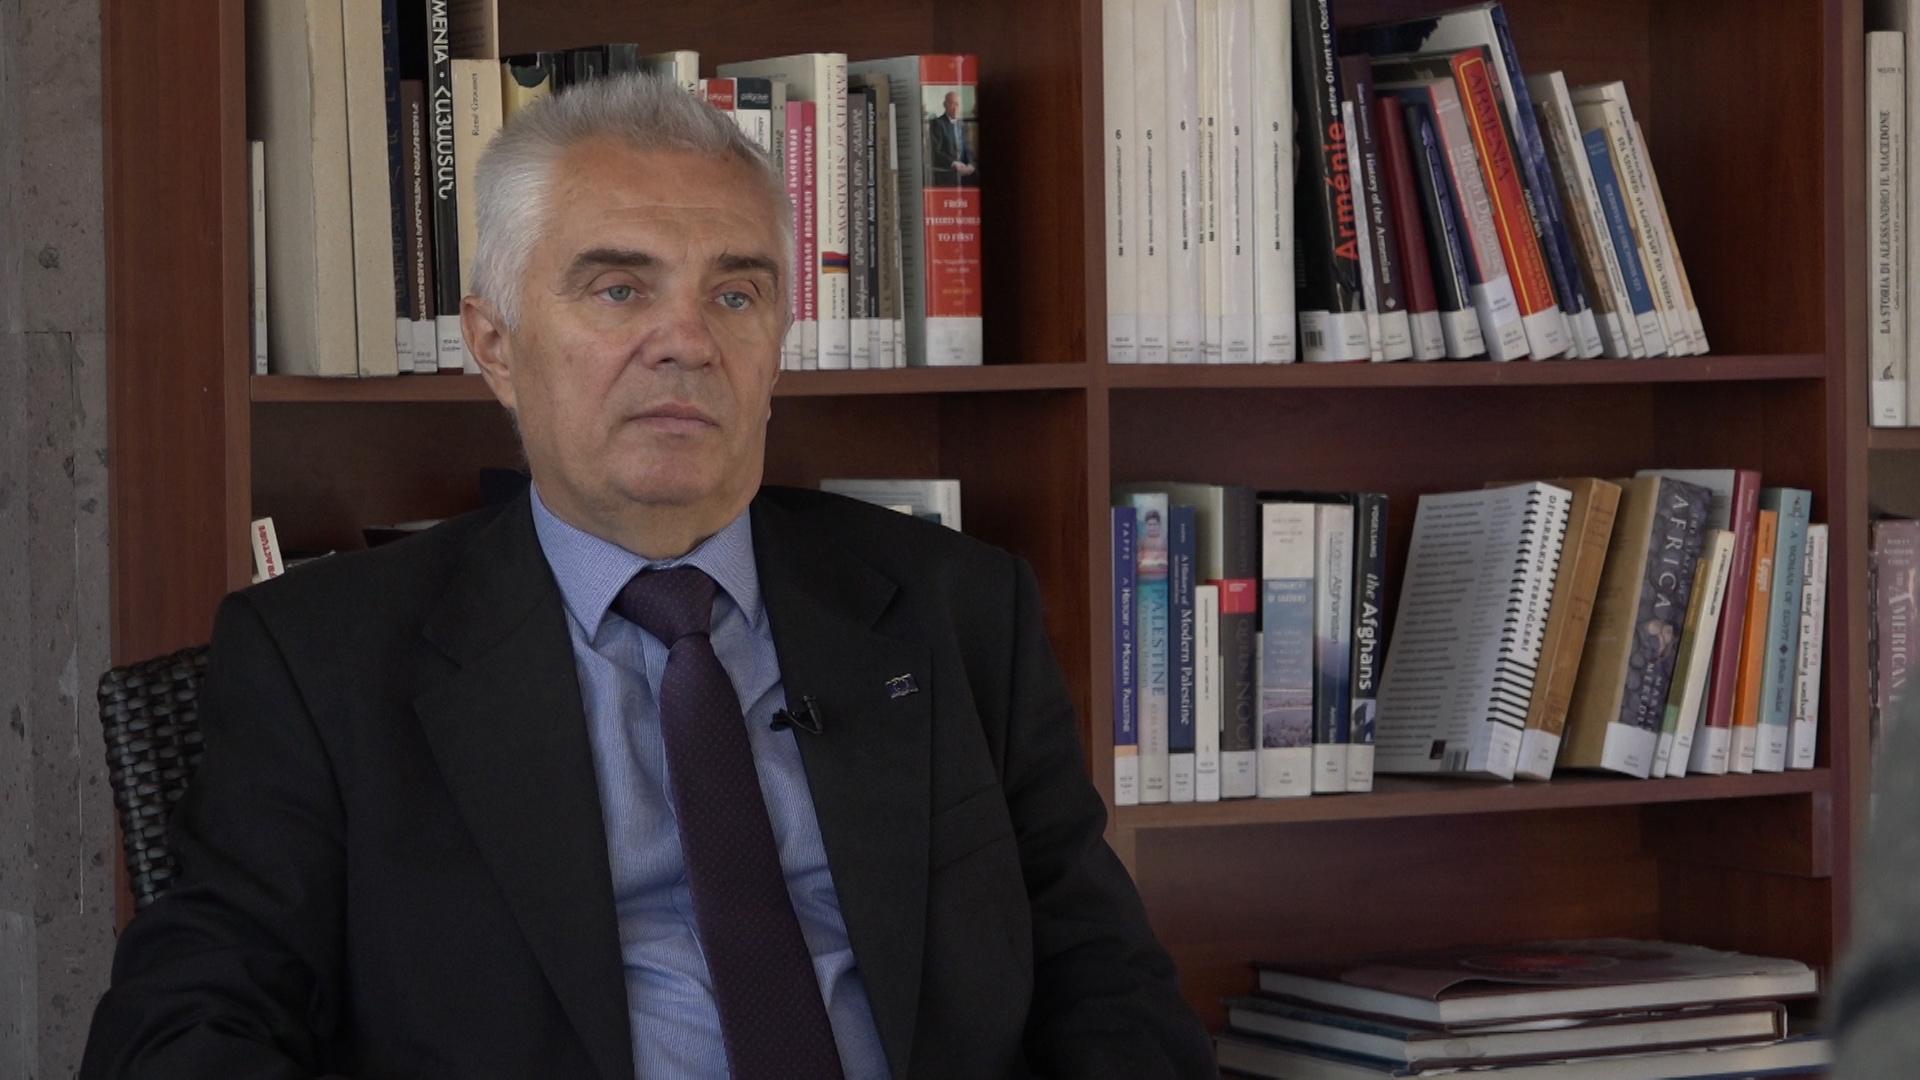 Piotr Switalski: The Agreement Will Create New Standards in Armenia